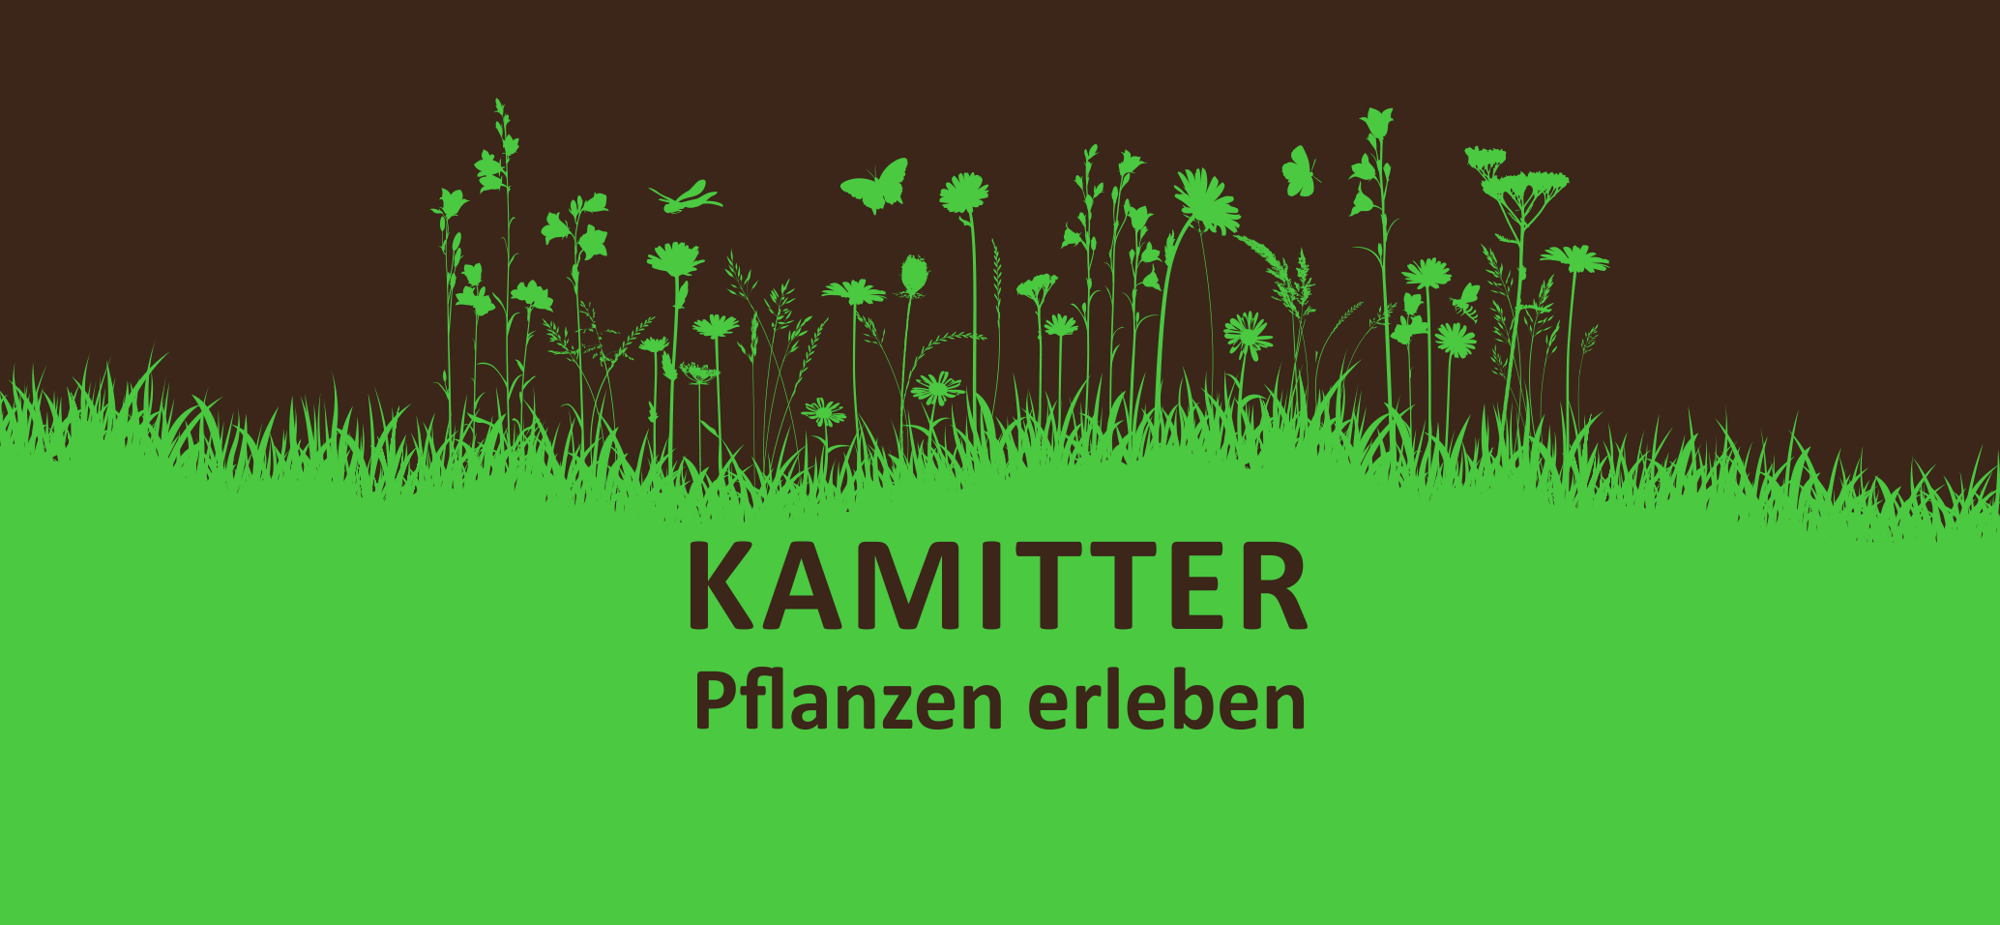 Baumschule Kamitter - Pflanzen erleben